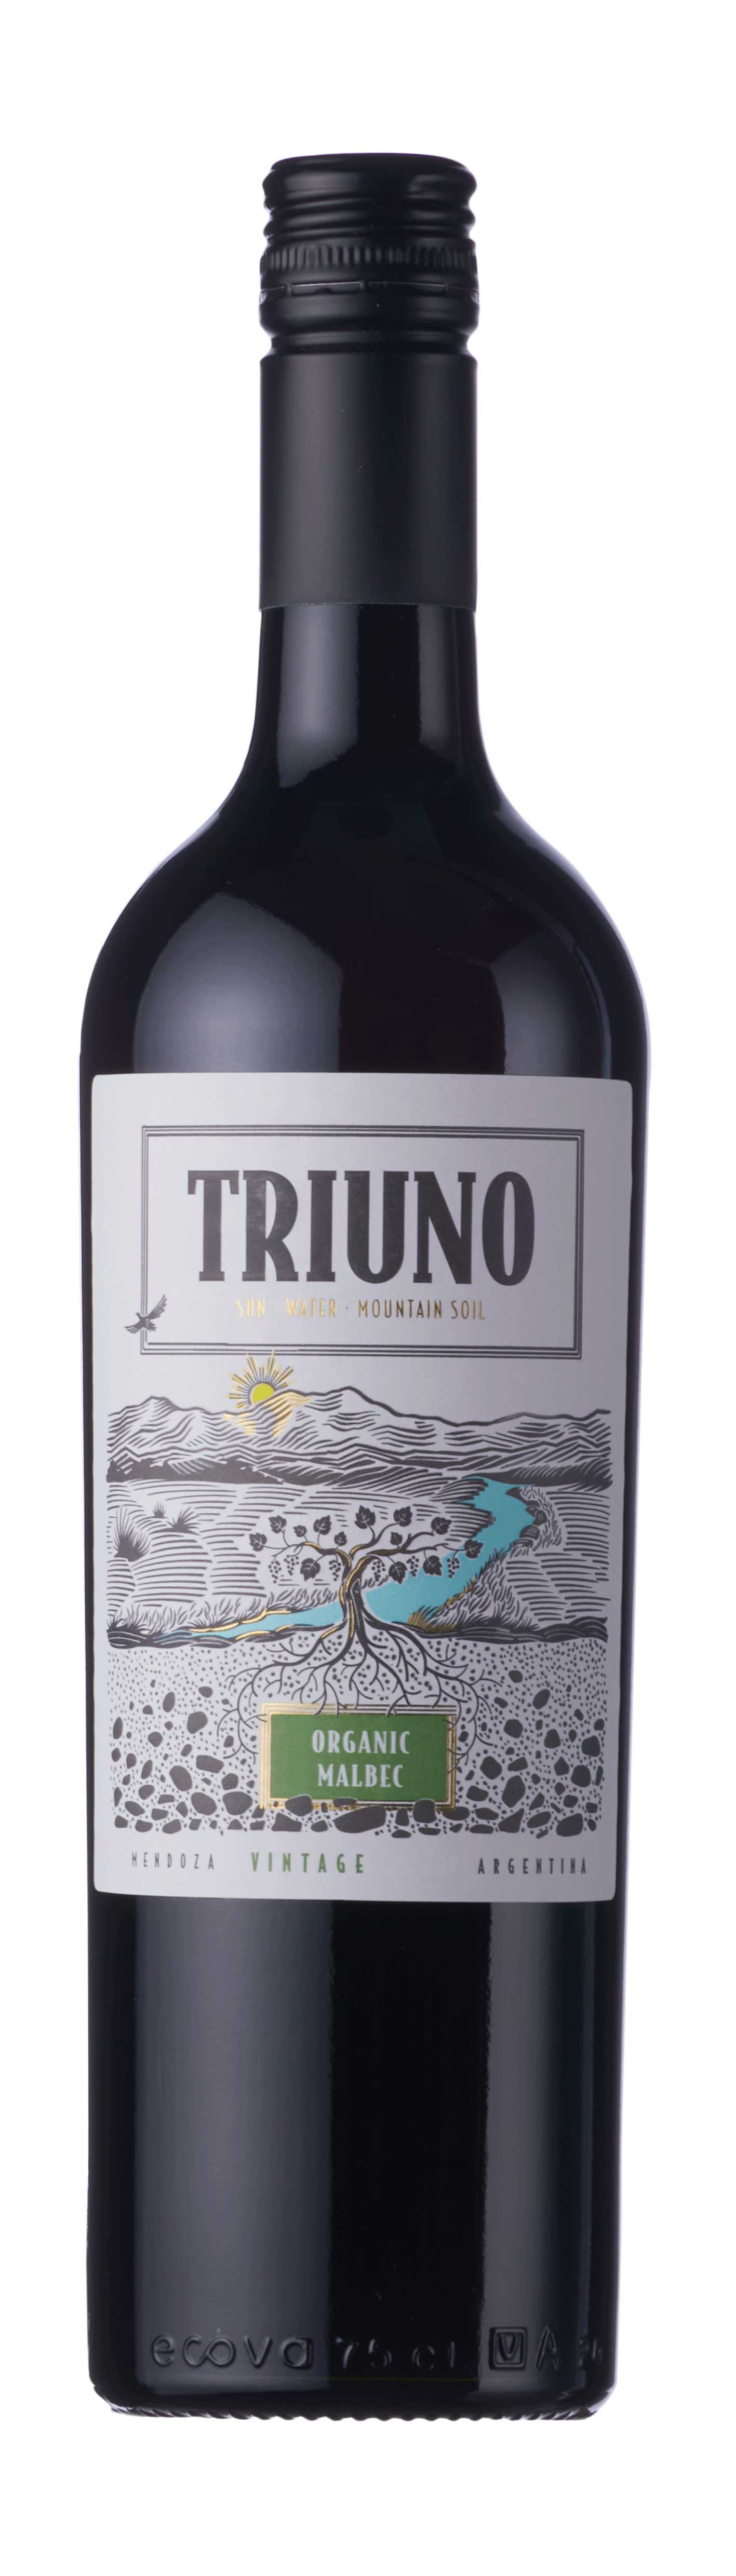 Bottle shot - Triuno Organic Malbec, Mendoza, Argentina